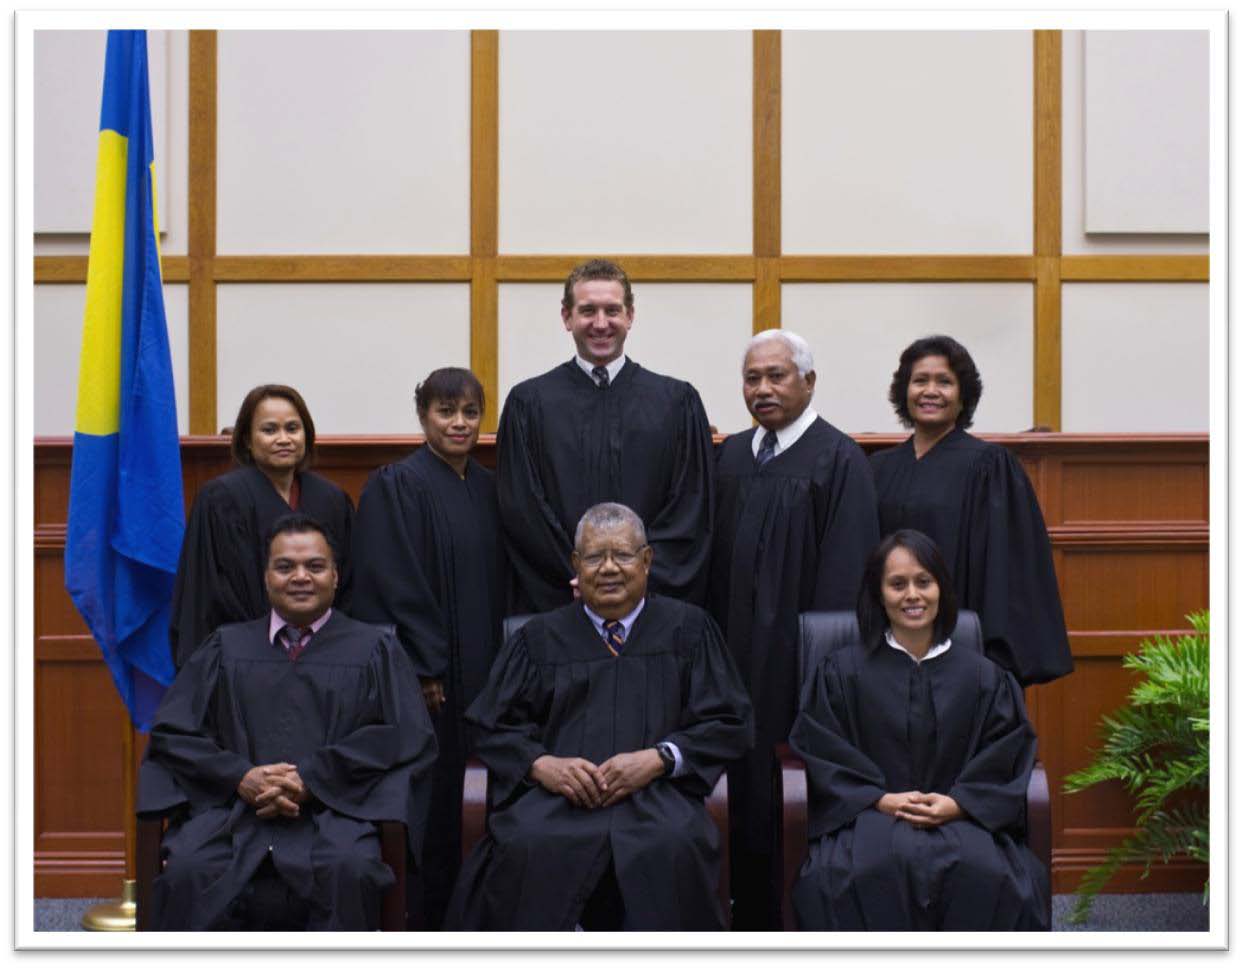 2014 judiciary photo